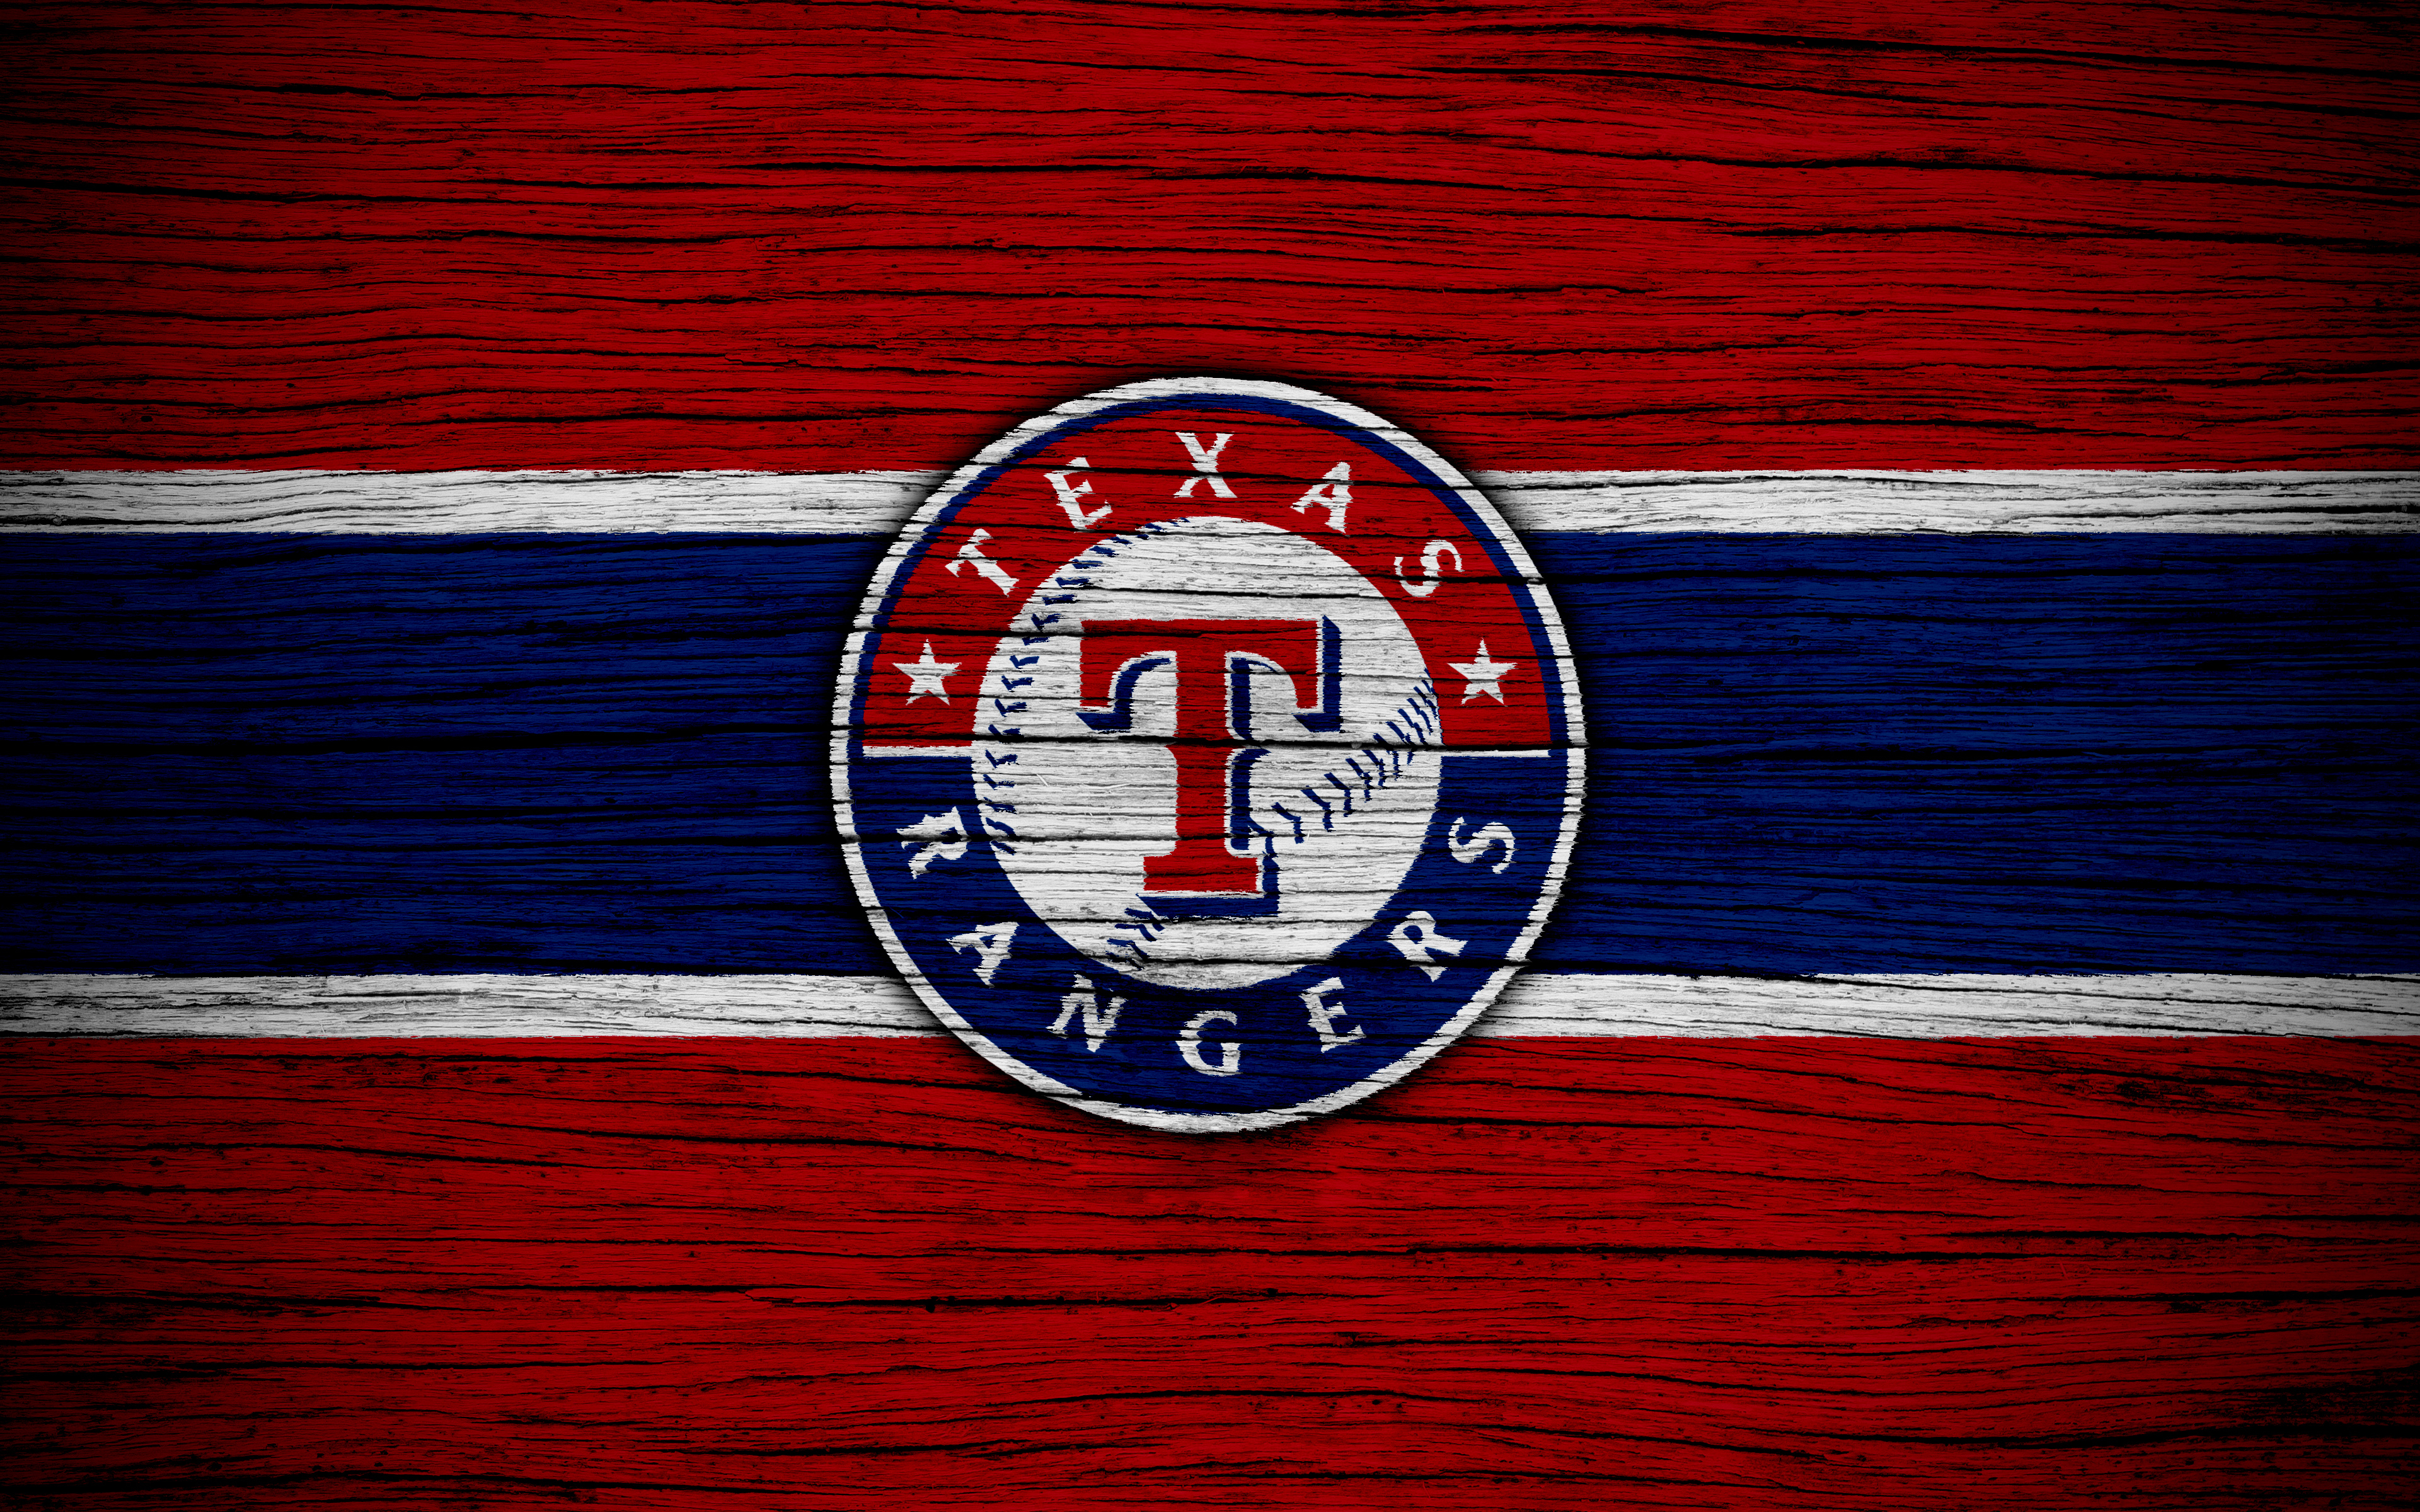 100+] Texas Rangers Wallpapers